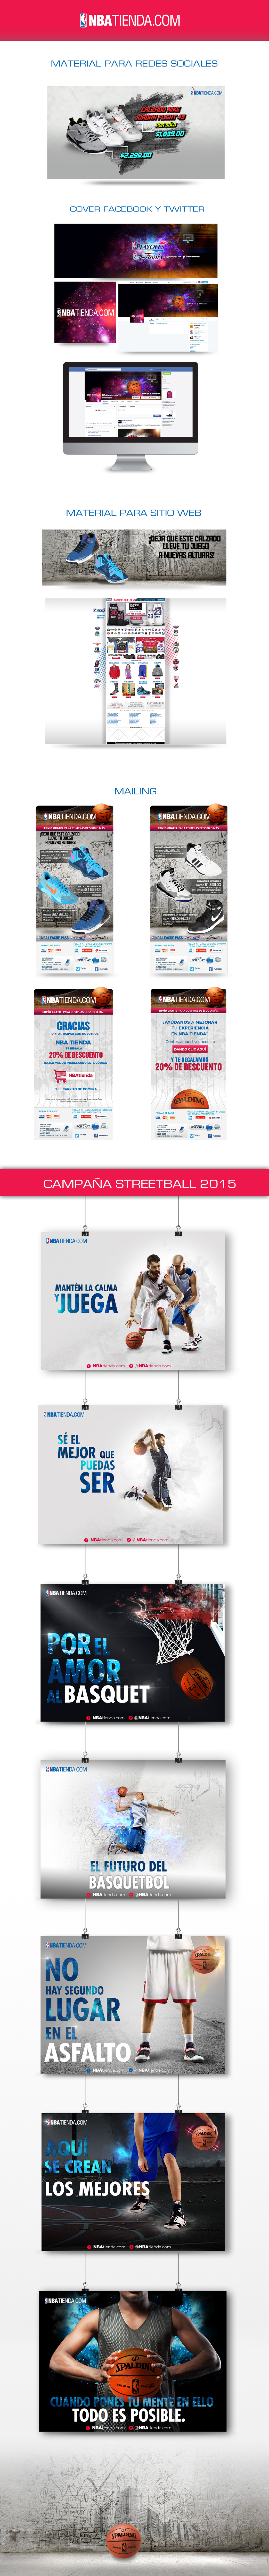 NBA Streetball basquetbol Playoffs balon Players player basketball basquet jugadores banners i-shop social media sports tennis